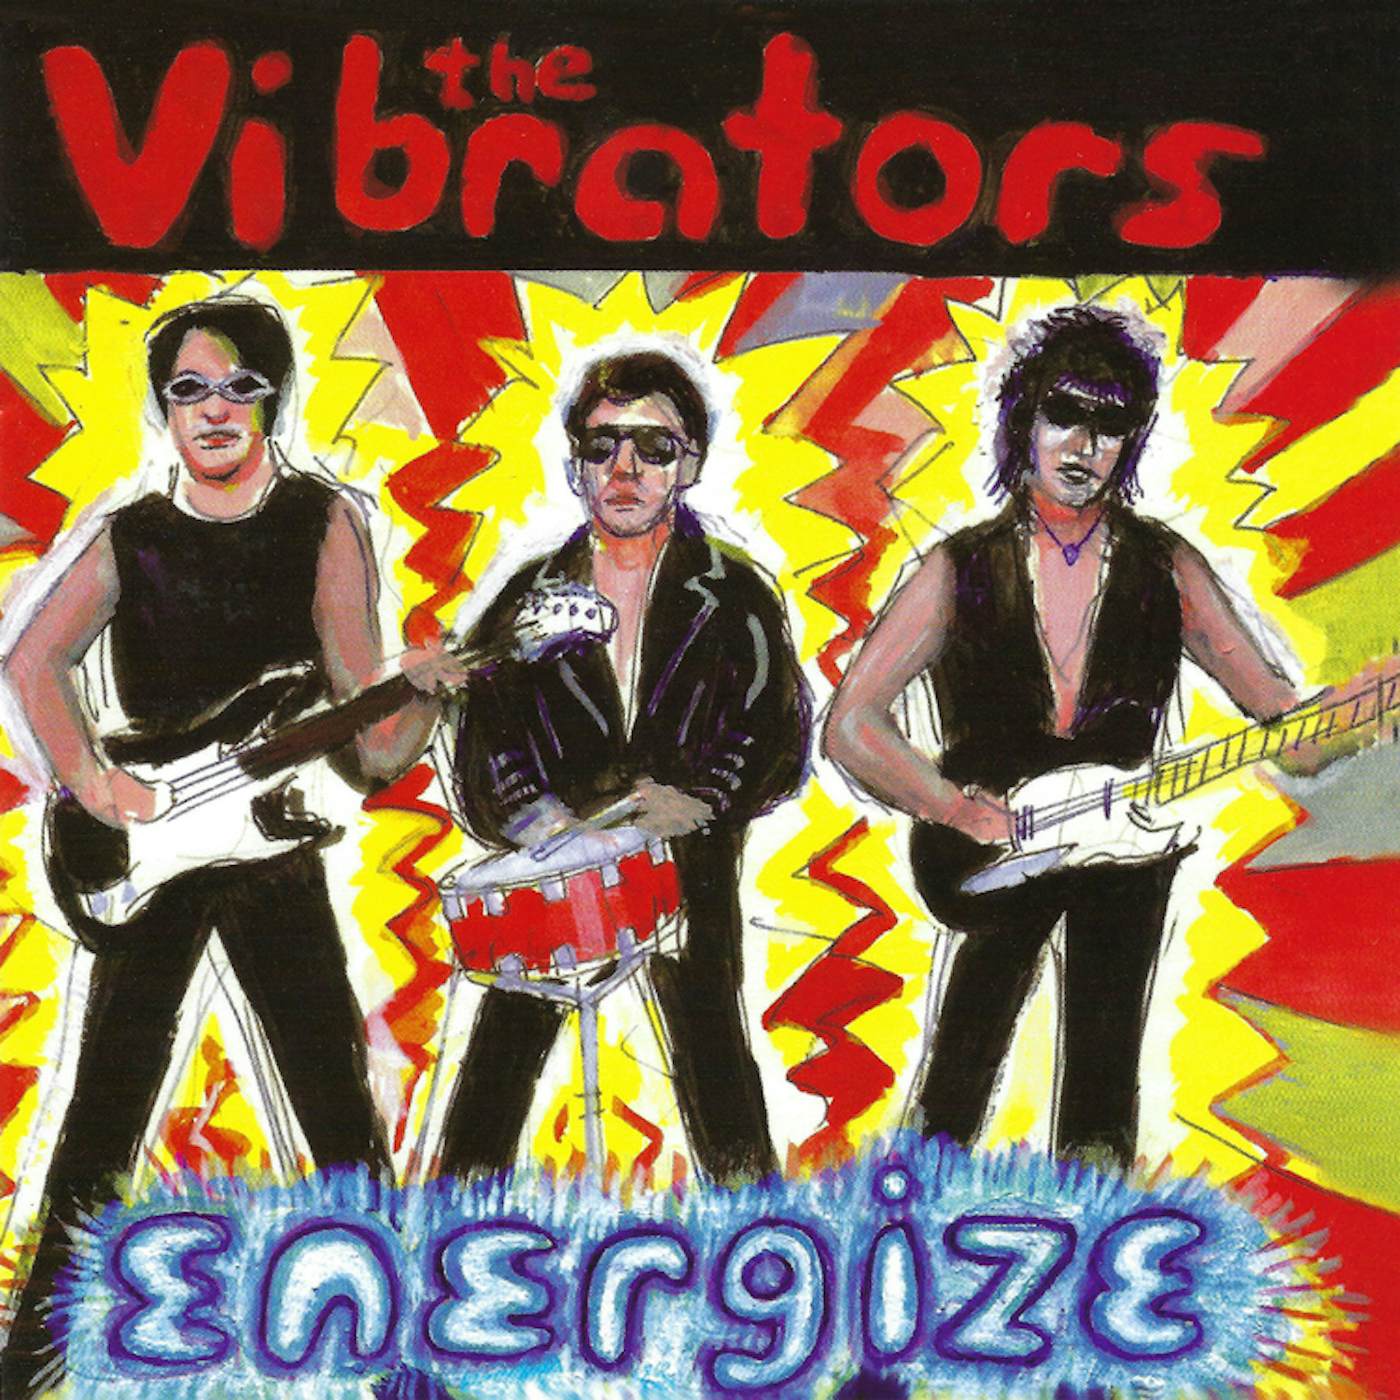 The Vibrators ENERGIZE (REMASTERED) CD